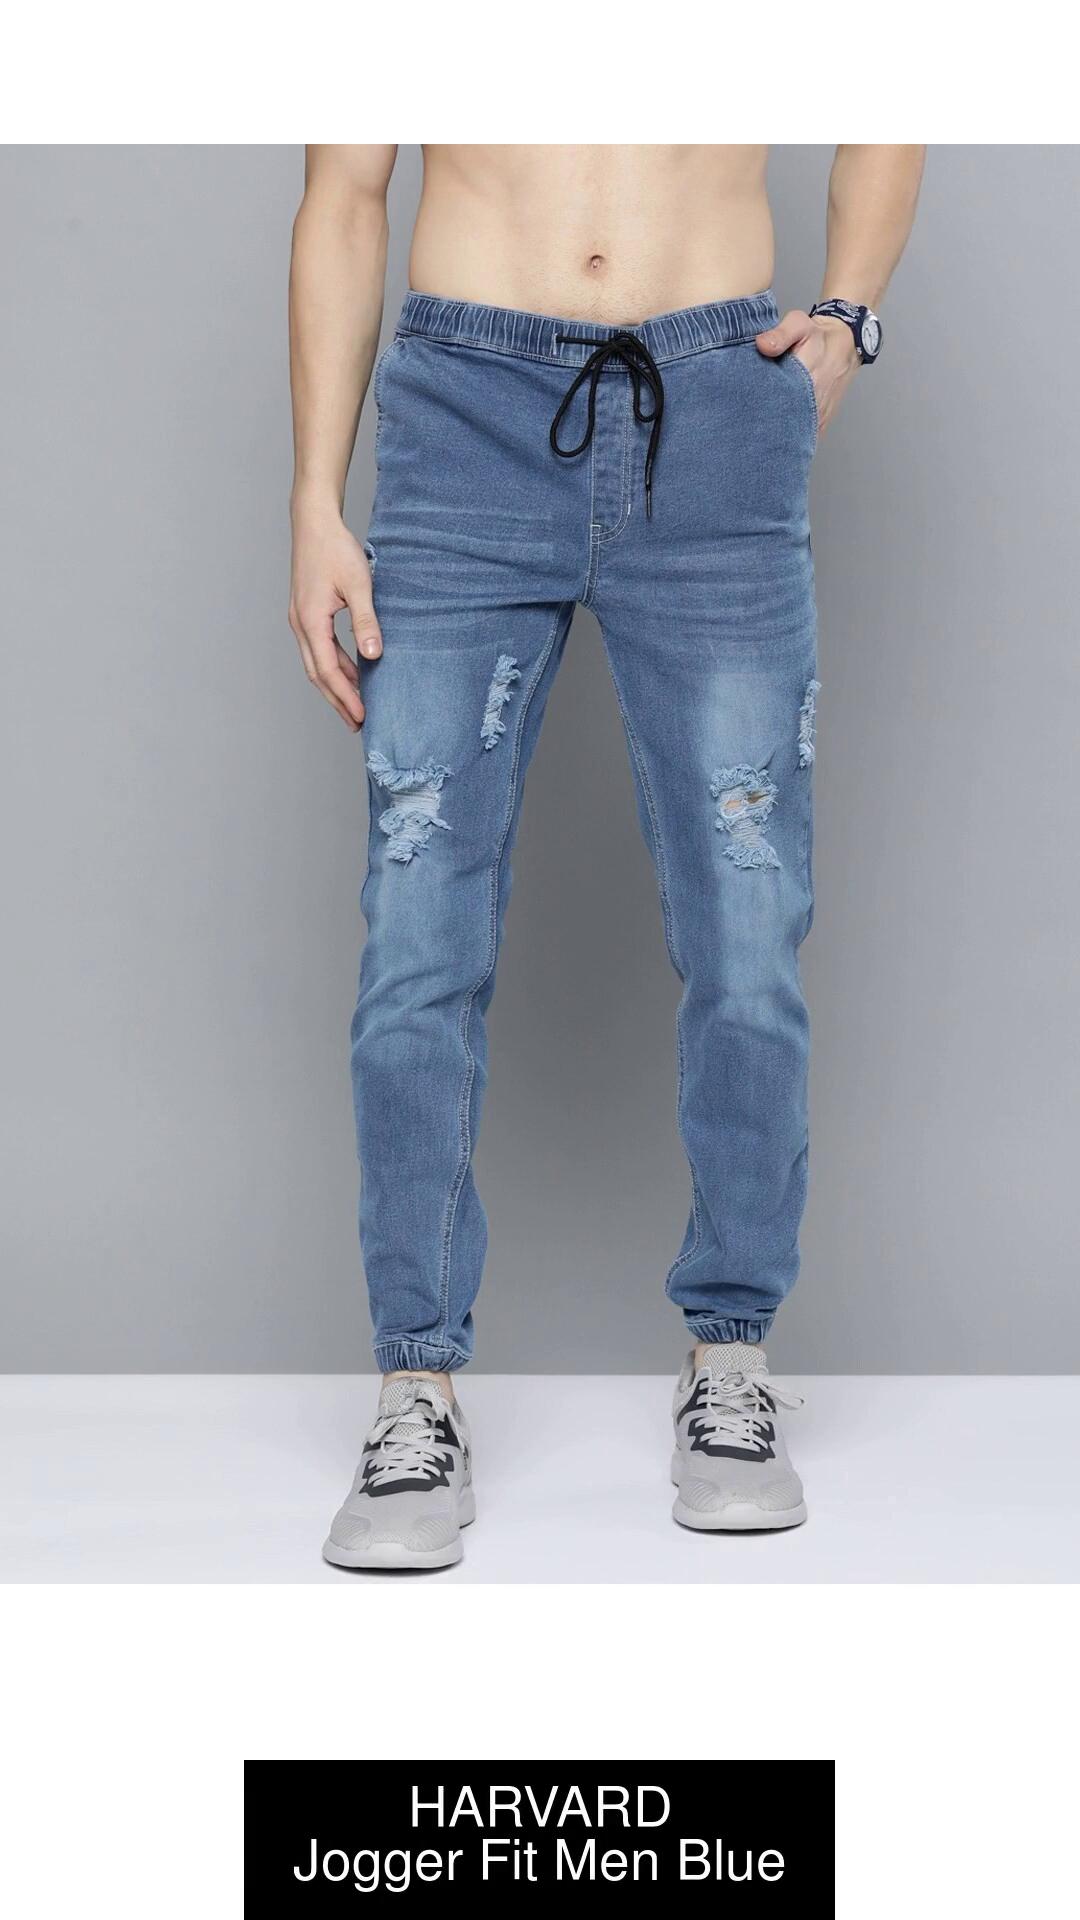 HARVARD Jogger Fit Men Blue Jeans - Buy HARVARD Jogger Fit Men Blue Jeans  Online at Best Prices in India